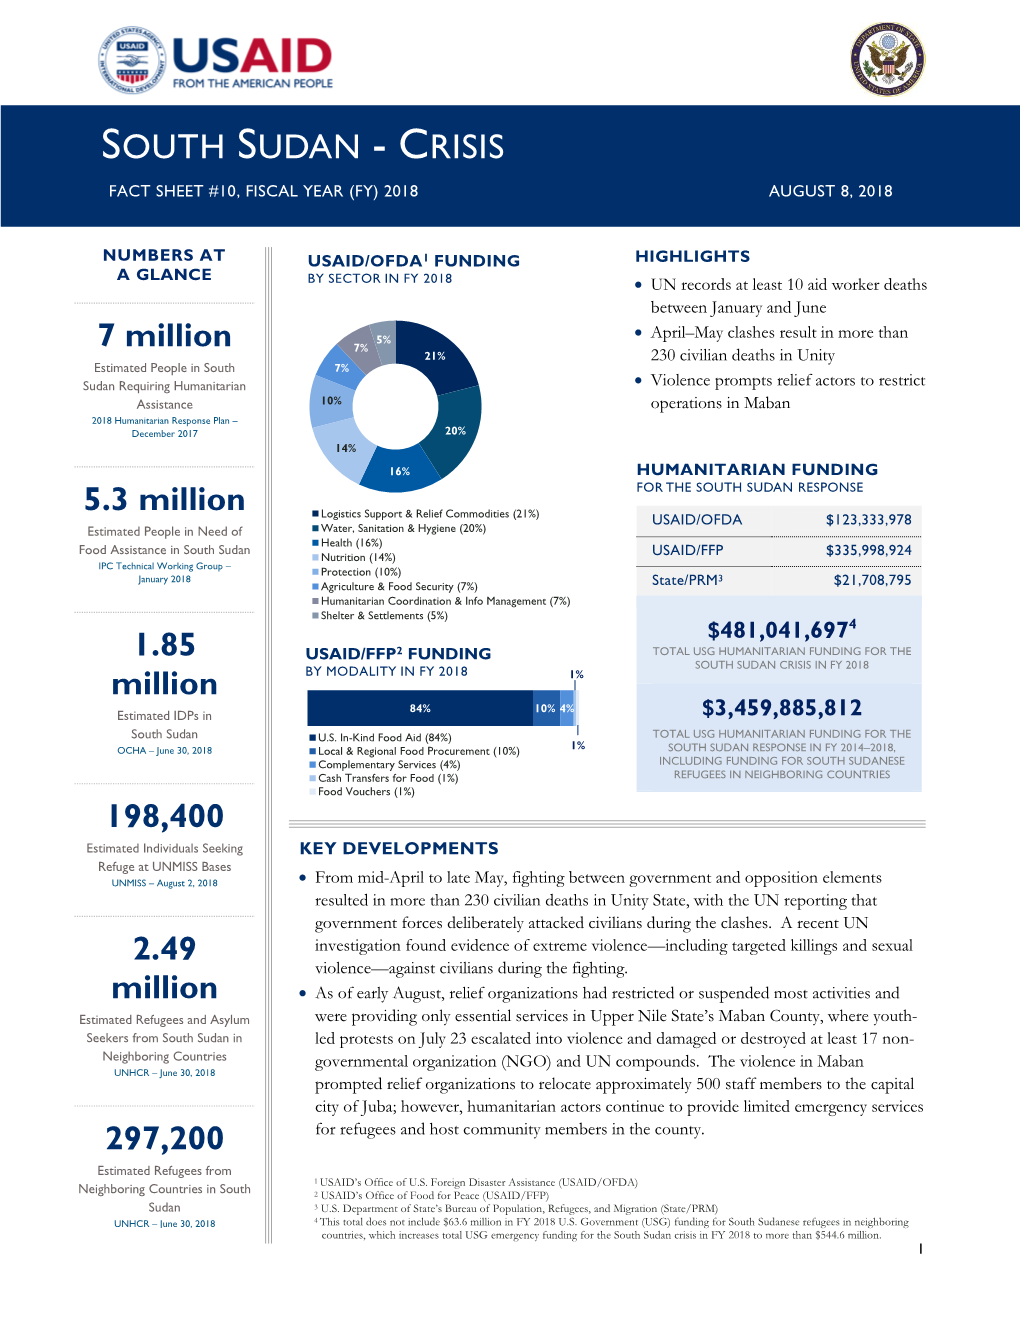 South Sudan Crisis Fact Sheet